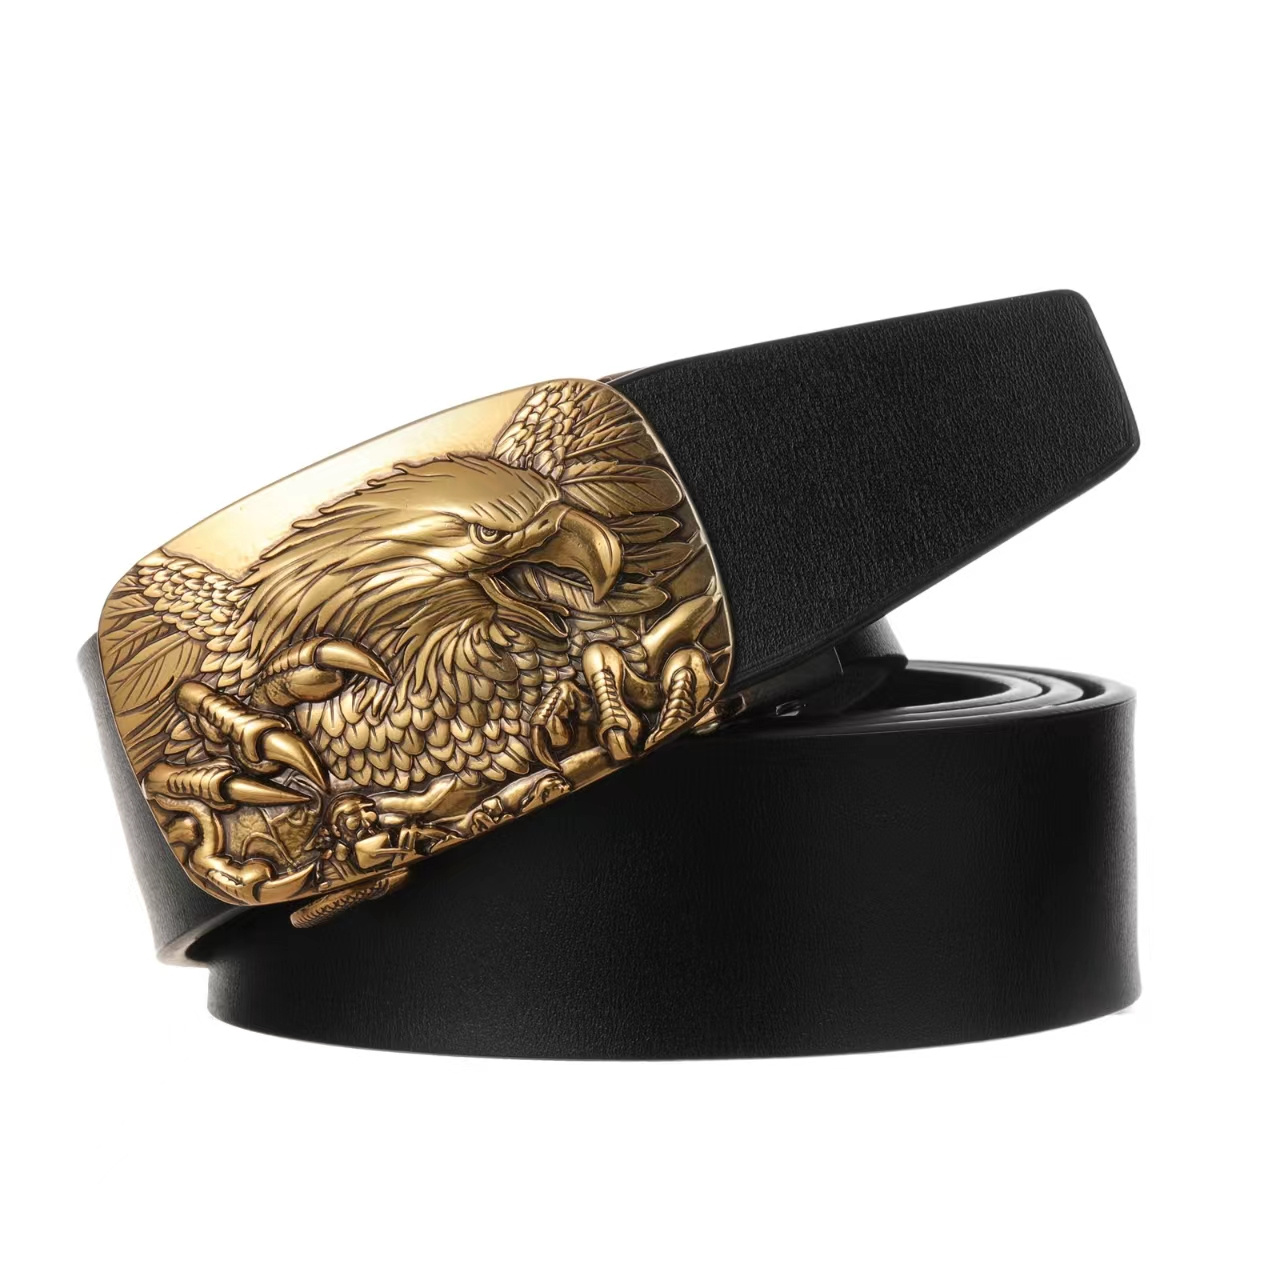 Versace Belt with a decorative buckle, Men's Accessories